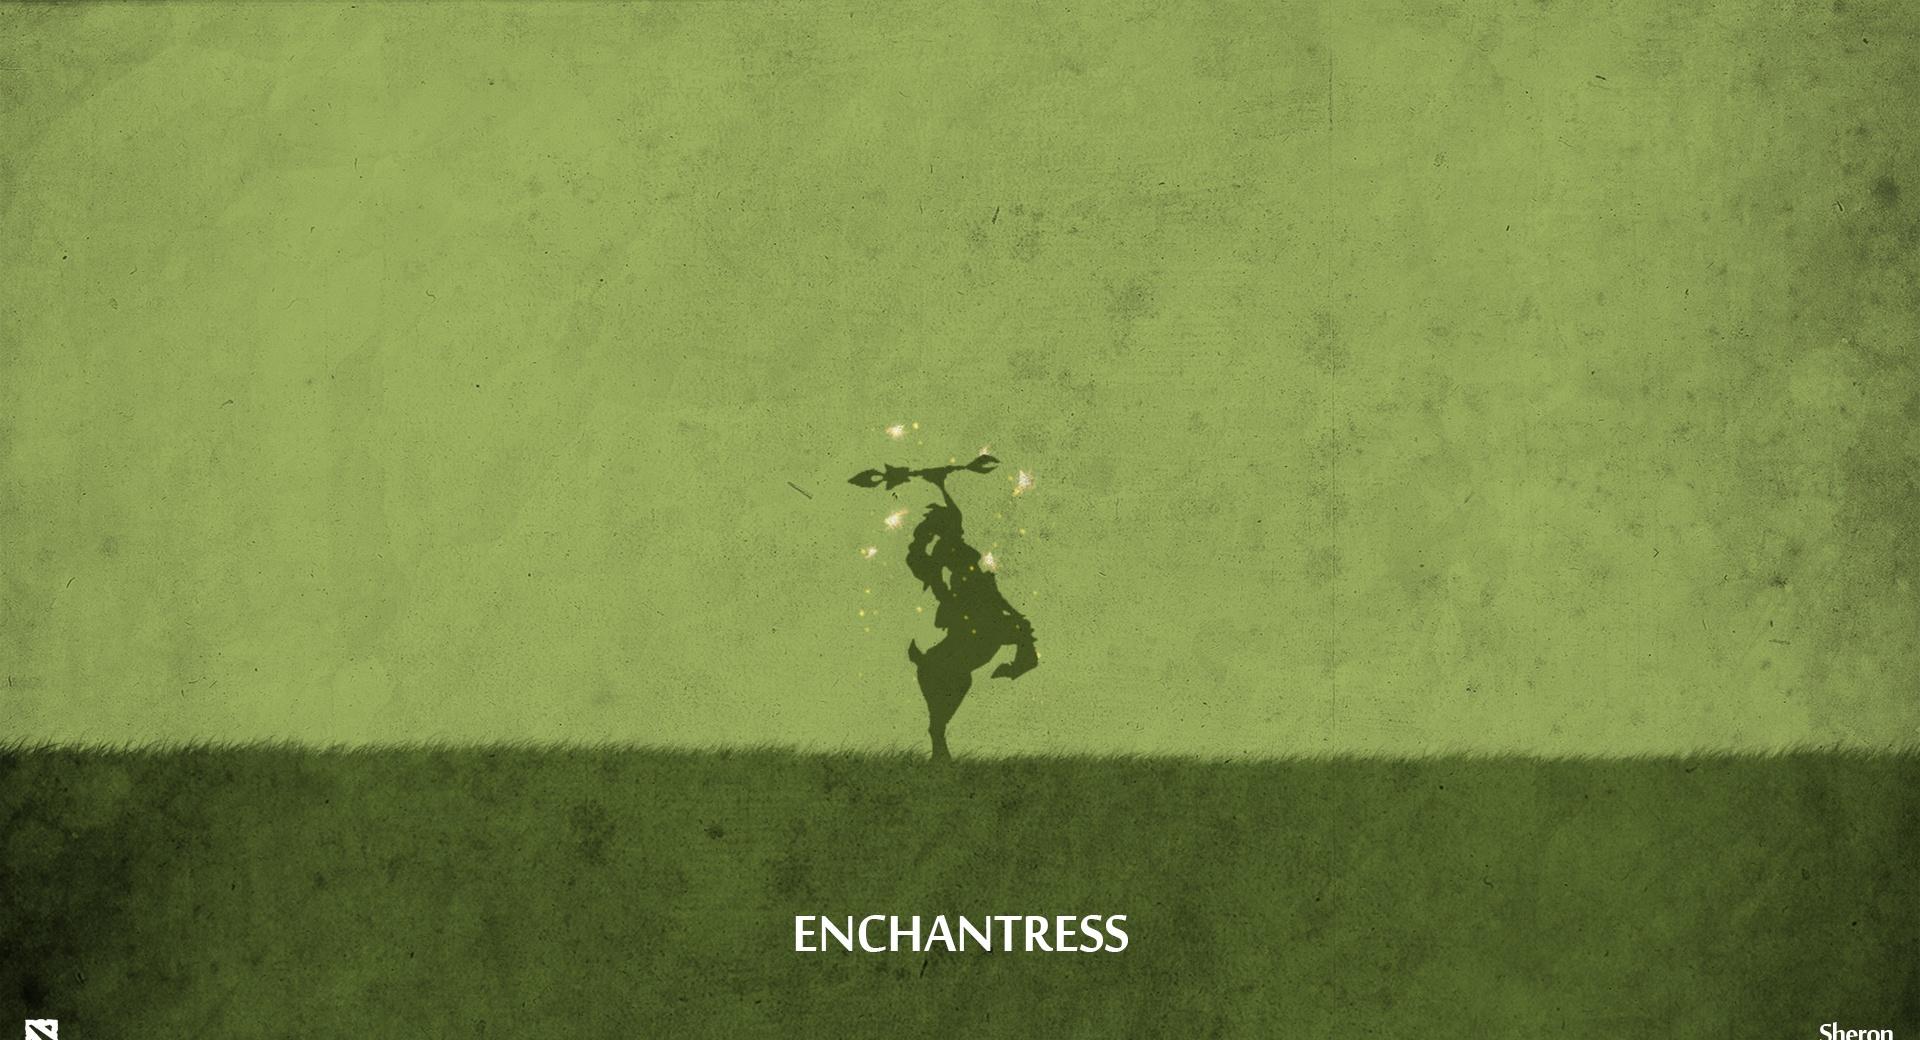 Enchantress - DotA 2 at 2048 x 2048 iPad size wallpapers HD quality